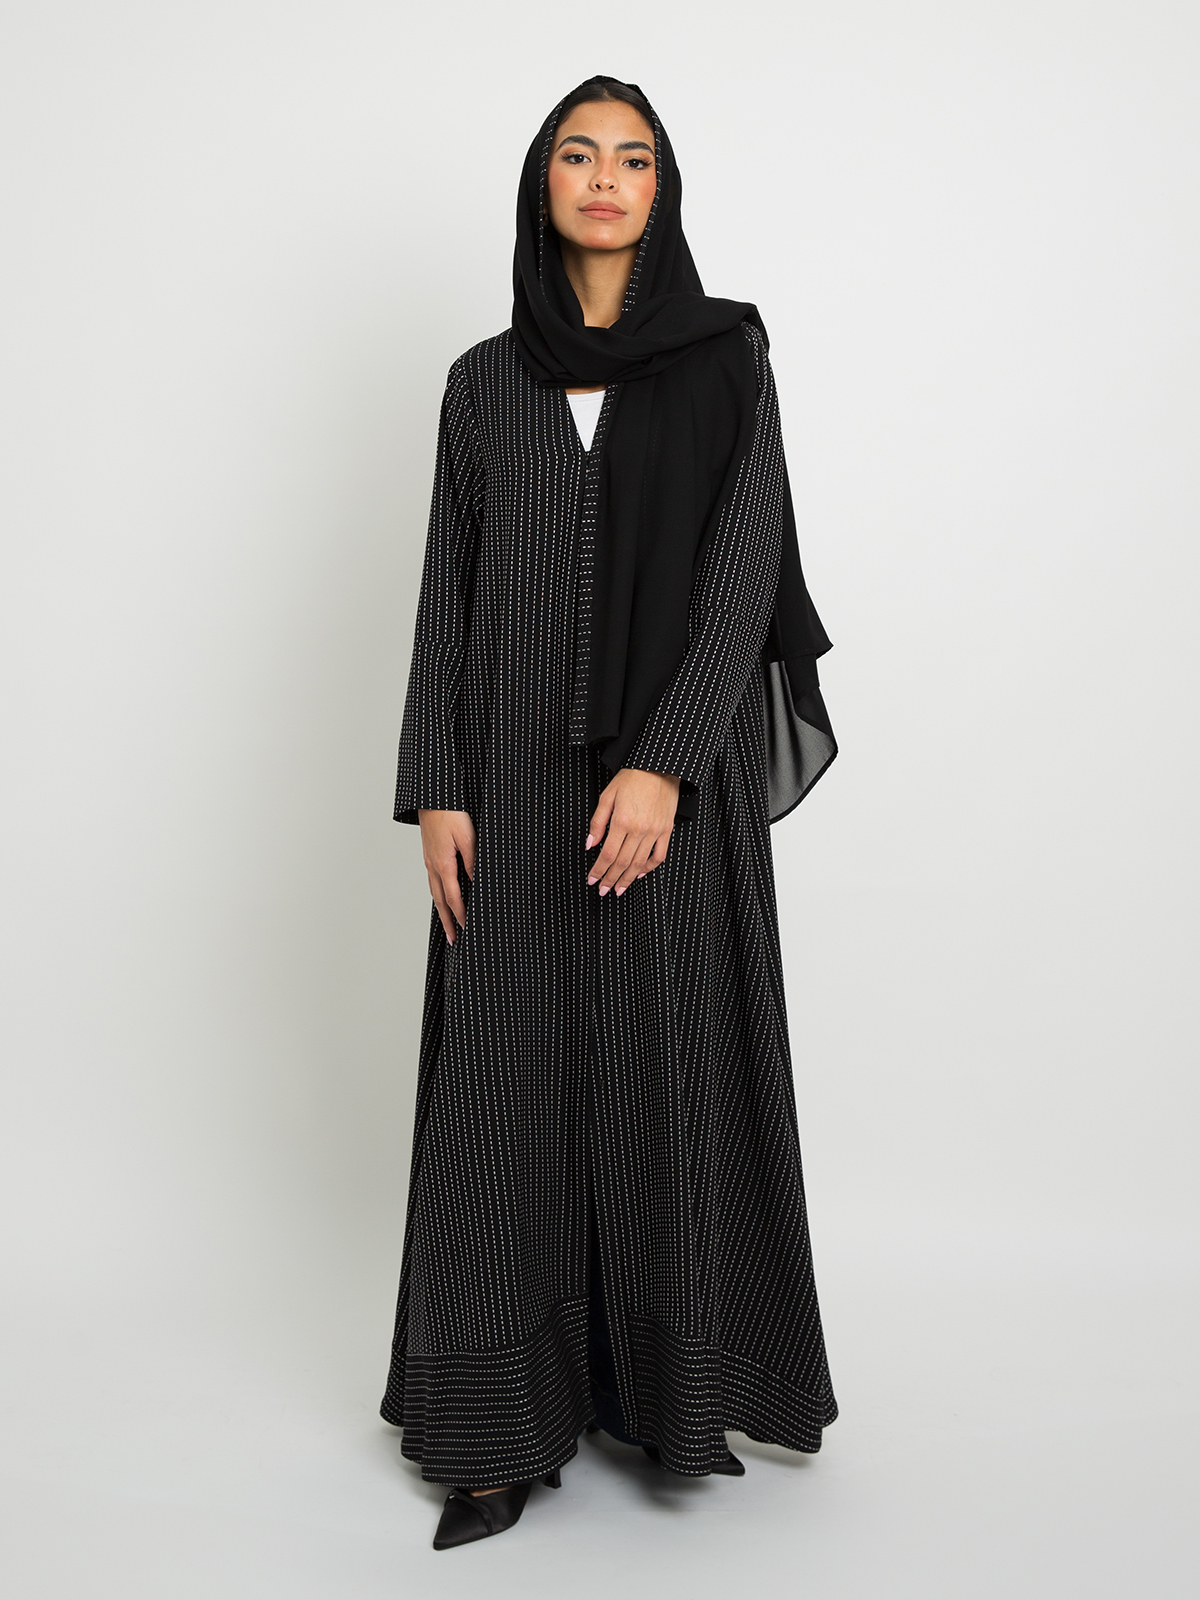 Black - A Cut Half Cloche Closed Front Abaya in Striped Salona Fabric